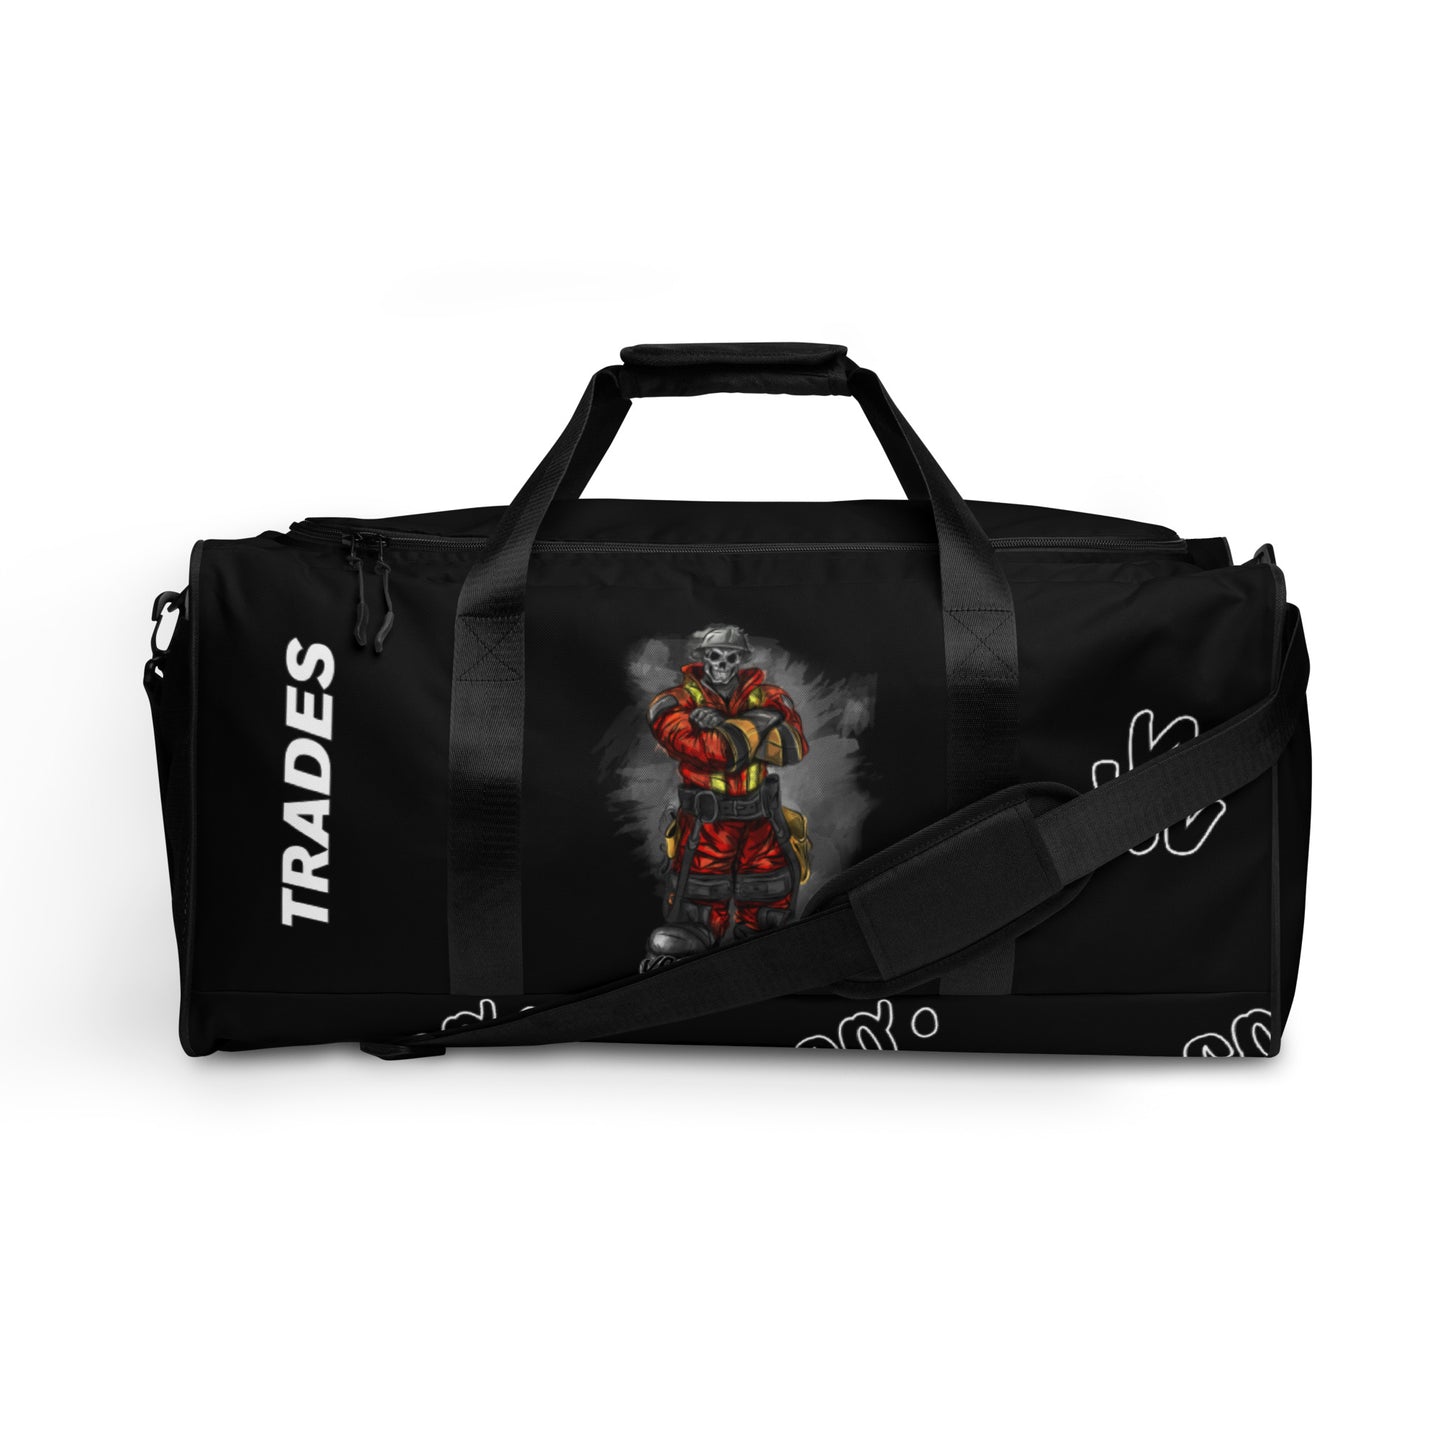 Trades - Duffle Bag